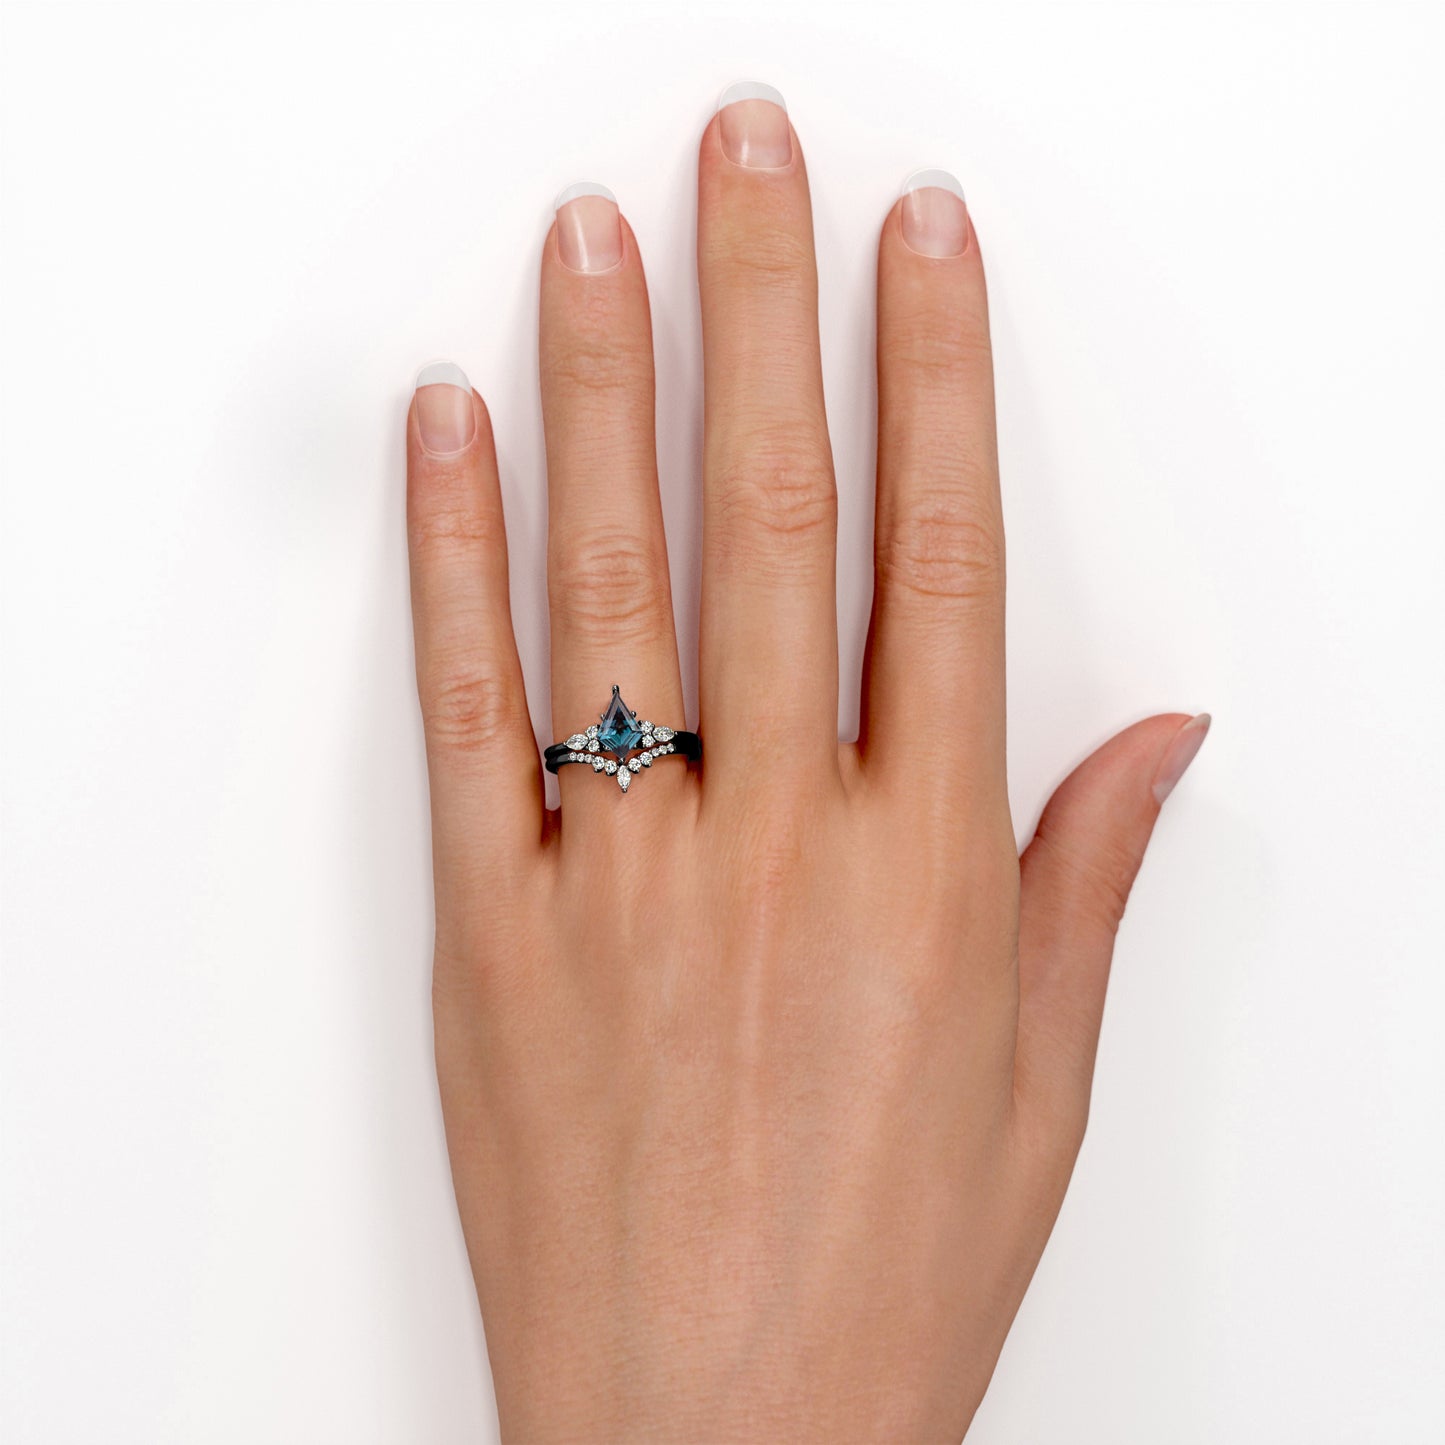 Artdeco 1.25 carat Kite shaped Synthetic Alexandrite and diamond crown tiara inspired wedding ring set in Rose gold